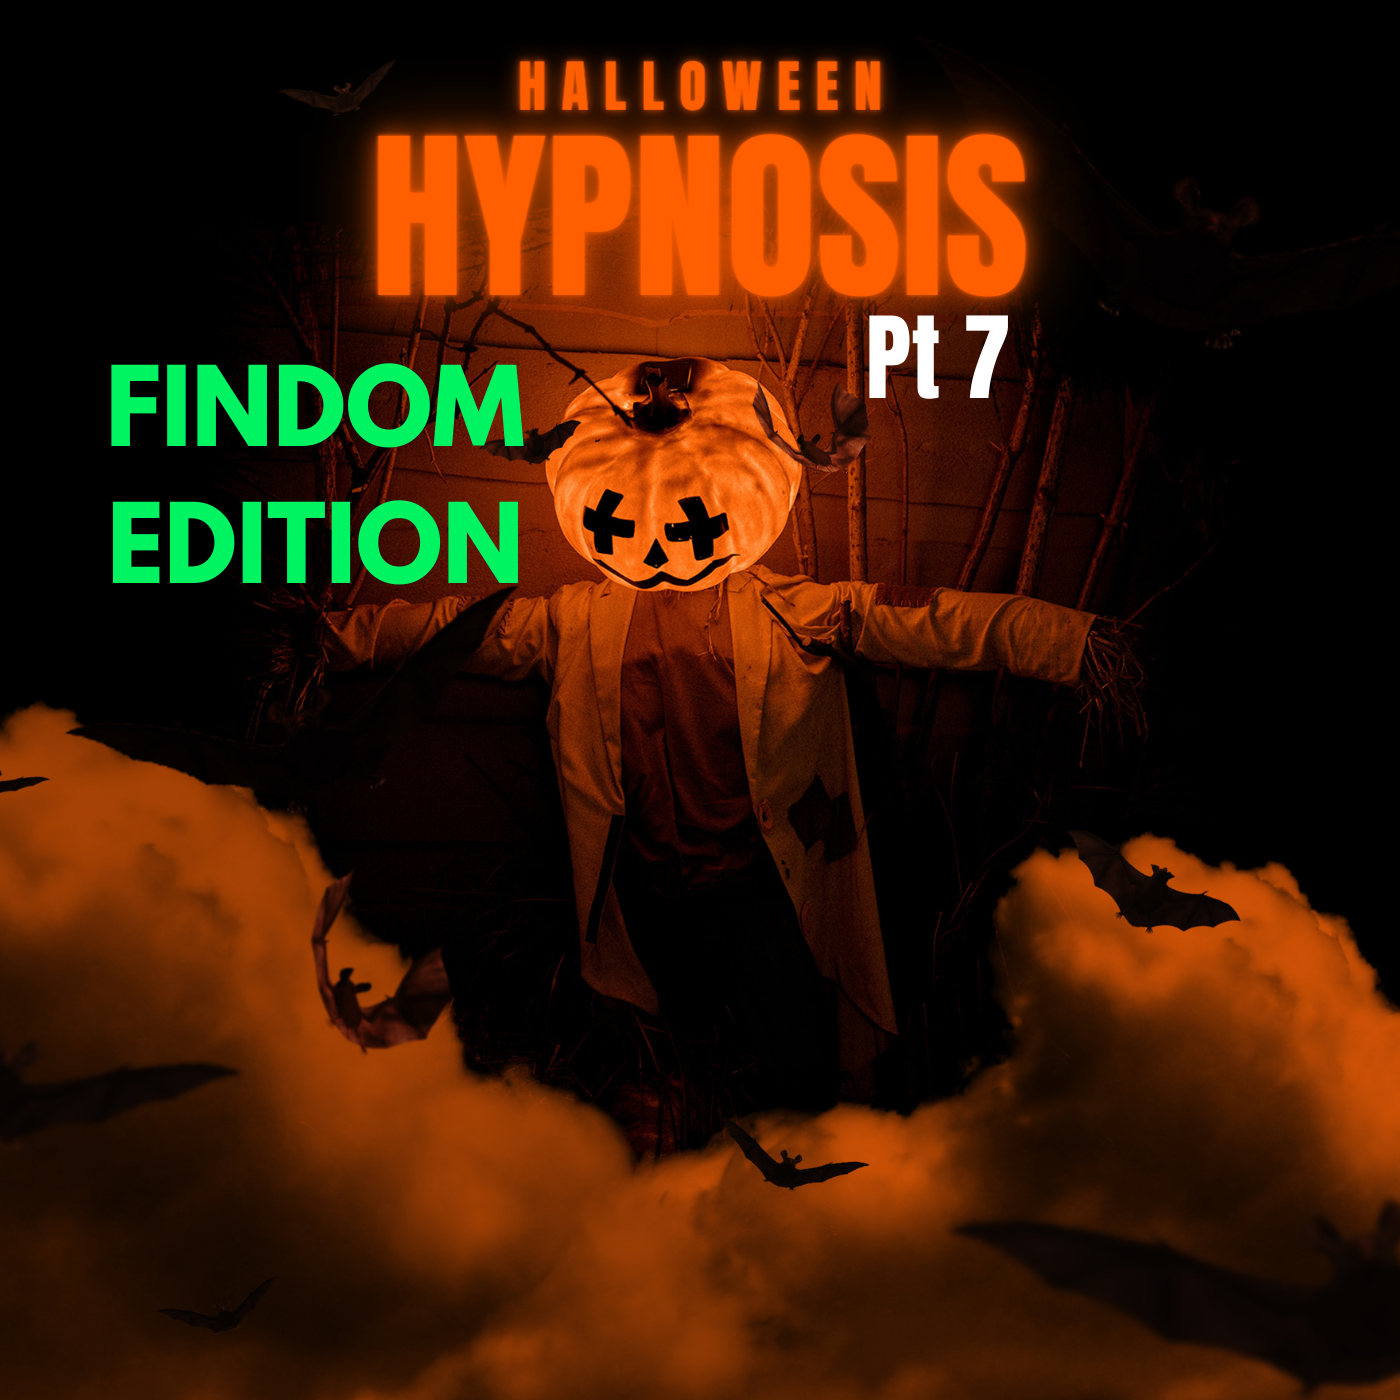 Halloween Hypnosis Pt 7 FINDOM EDITION